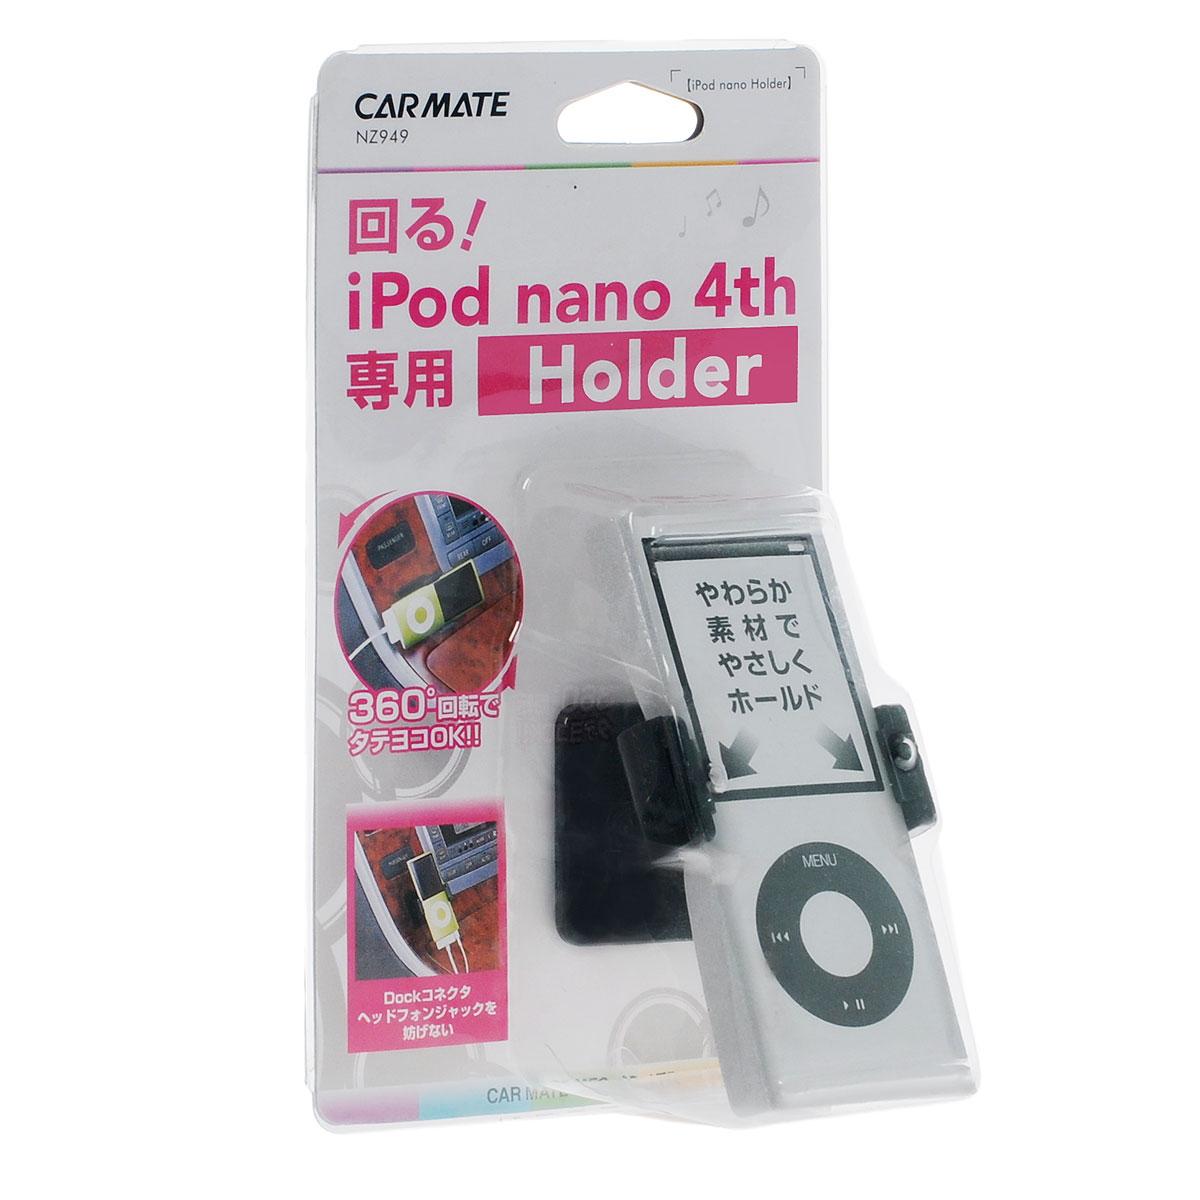   iPod "Carmate iPod Nano Holder", : 